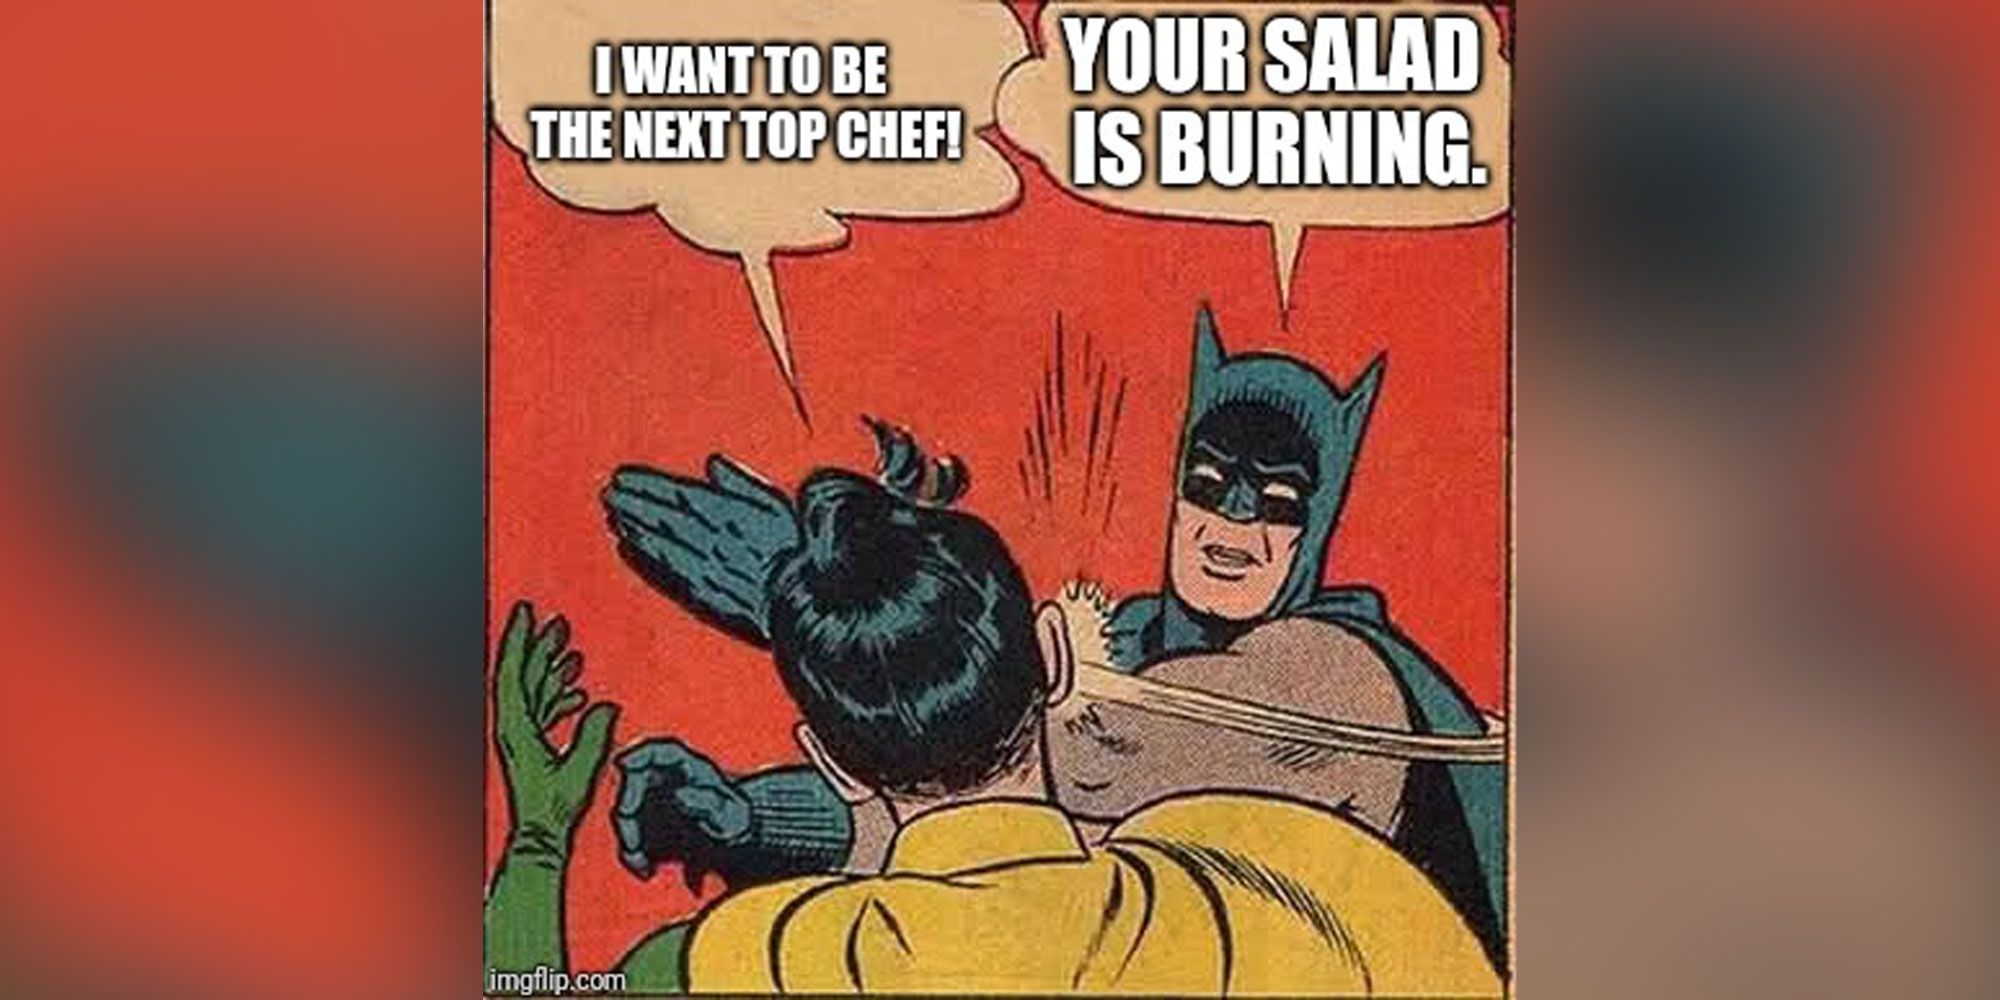 Not Me Burning A Salad